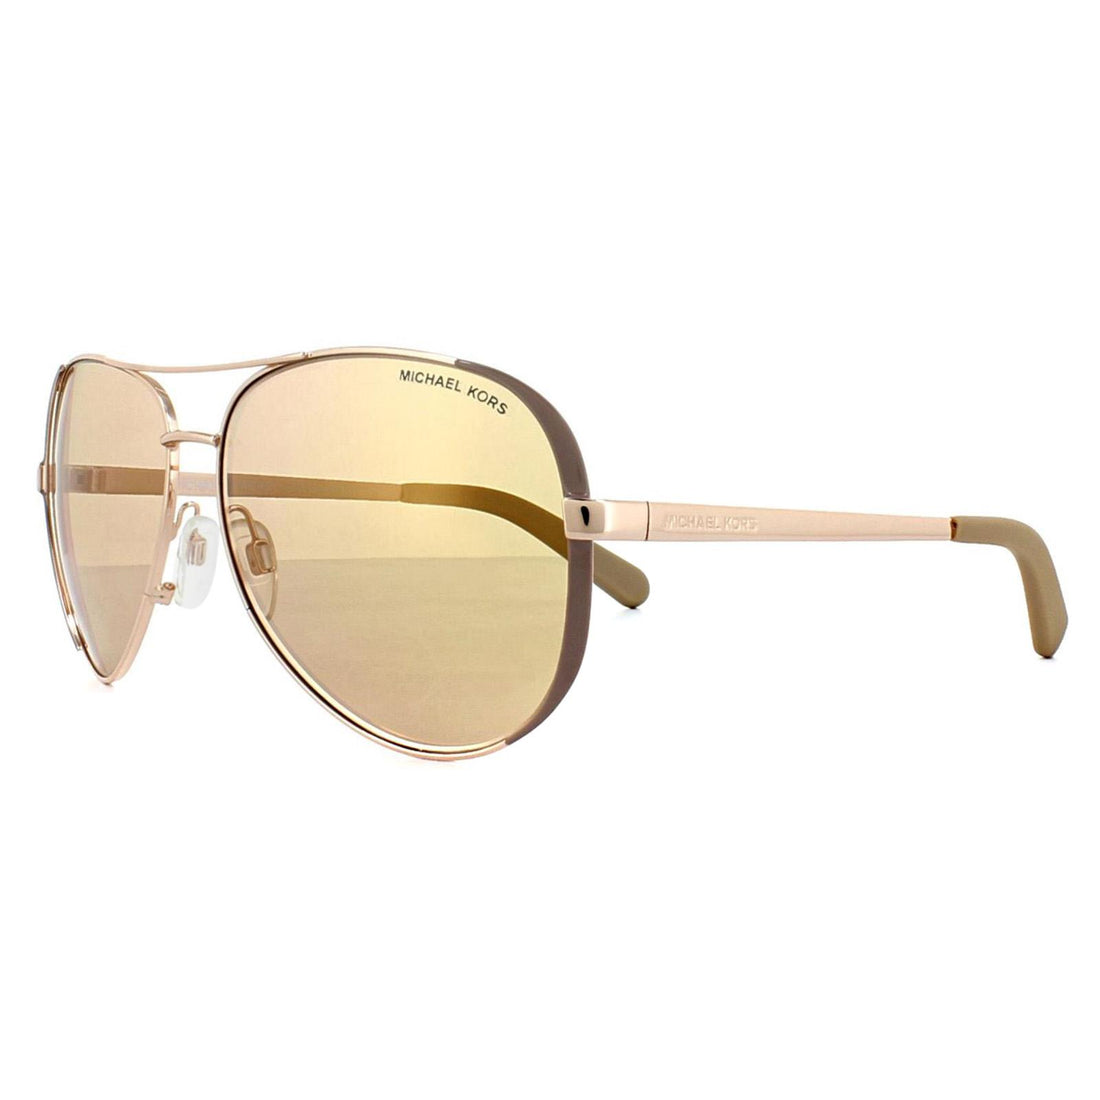 Michael Kors Sunglasses Chelsea 5004 1017R1 Polished Rose Gold Rose Gold Mirror